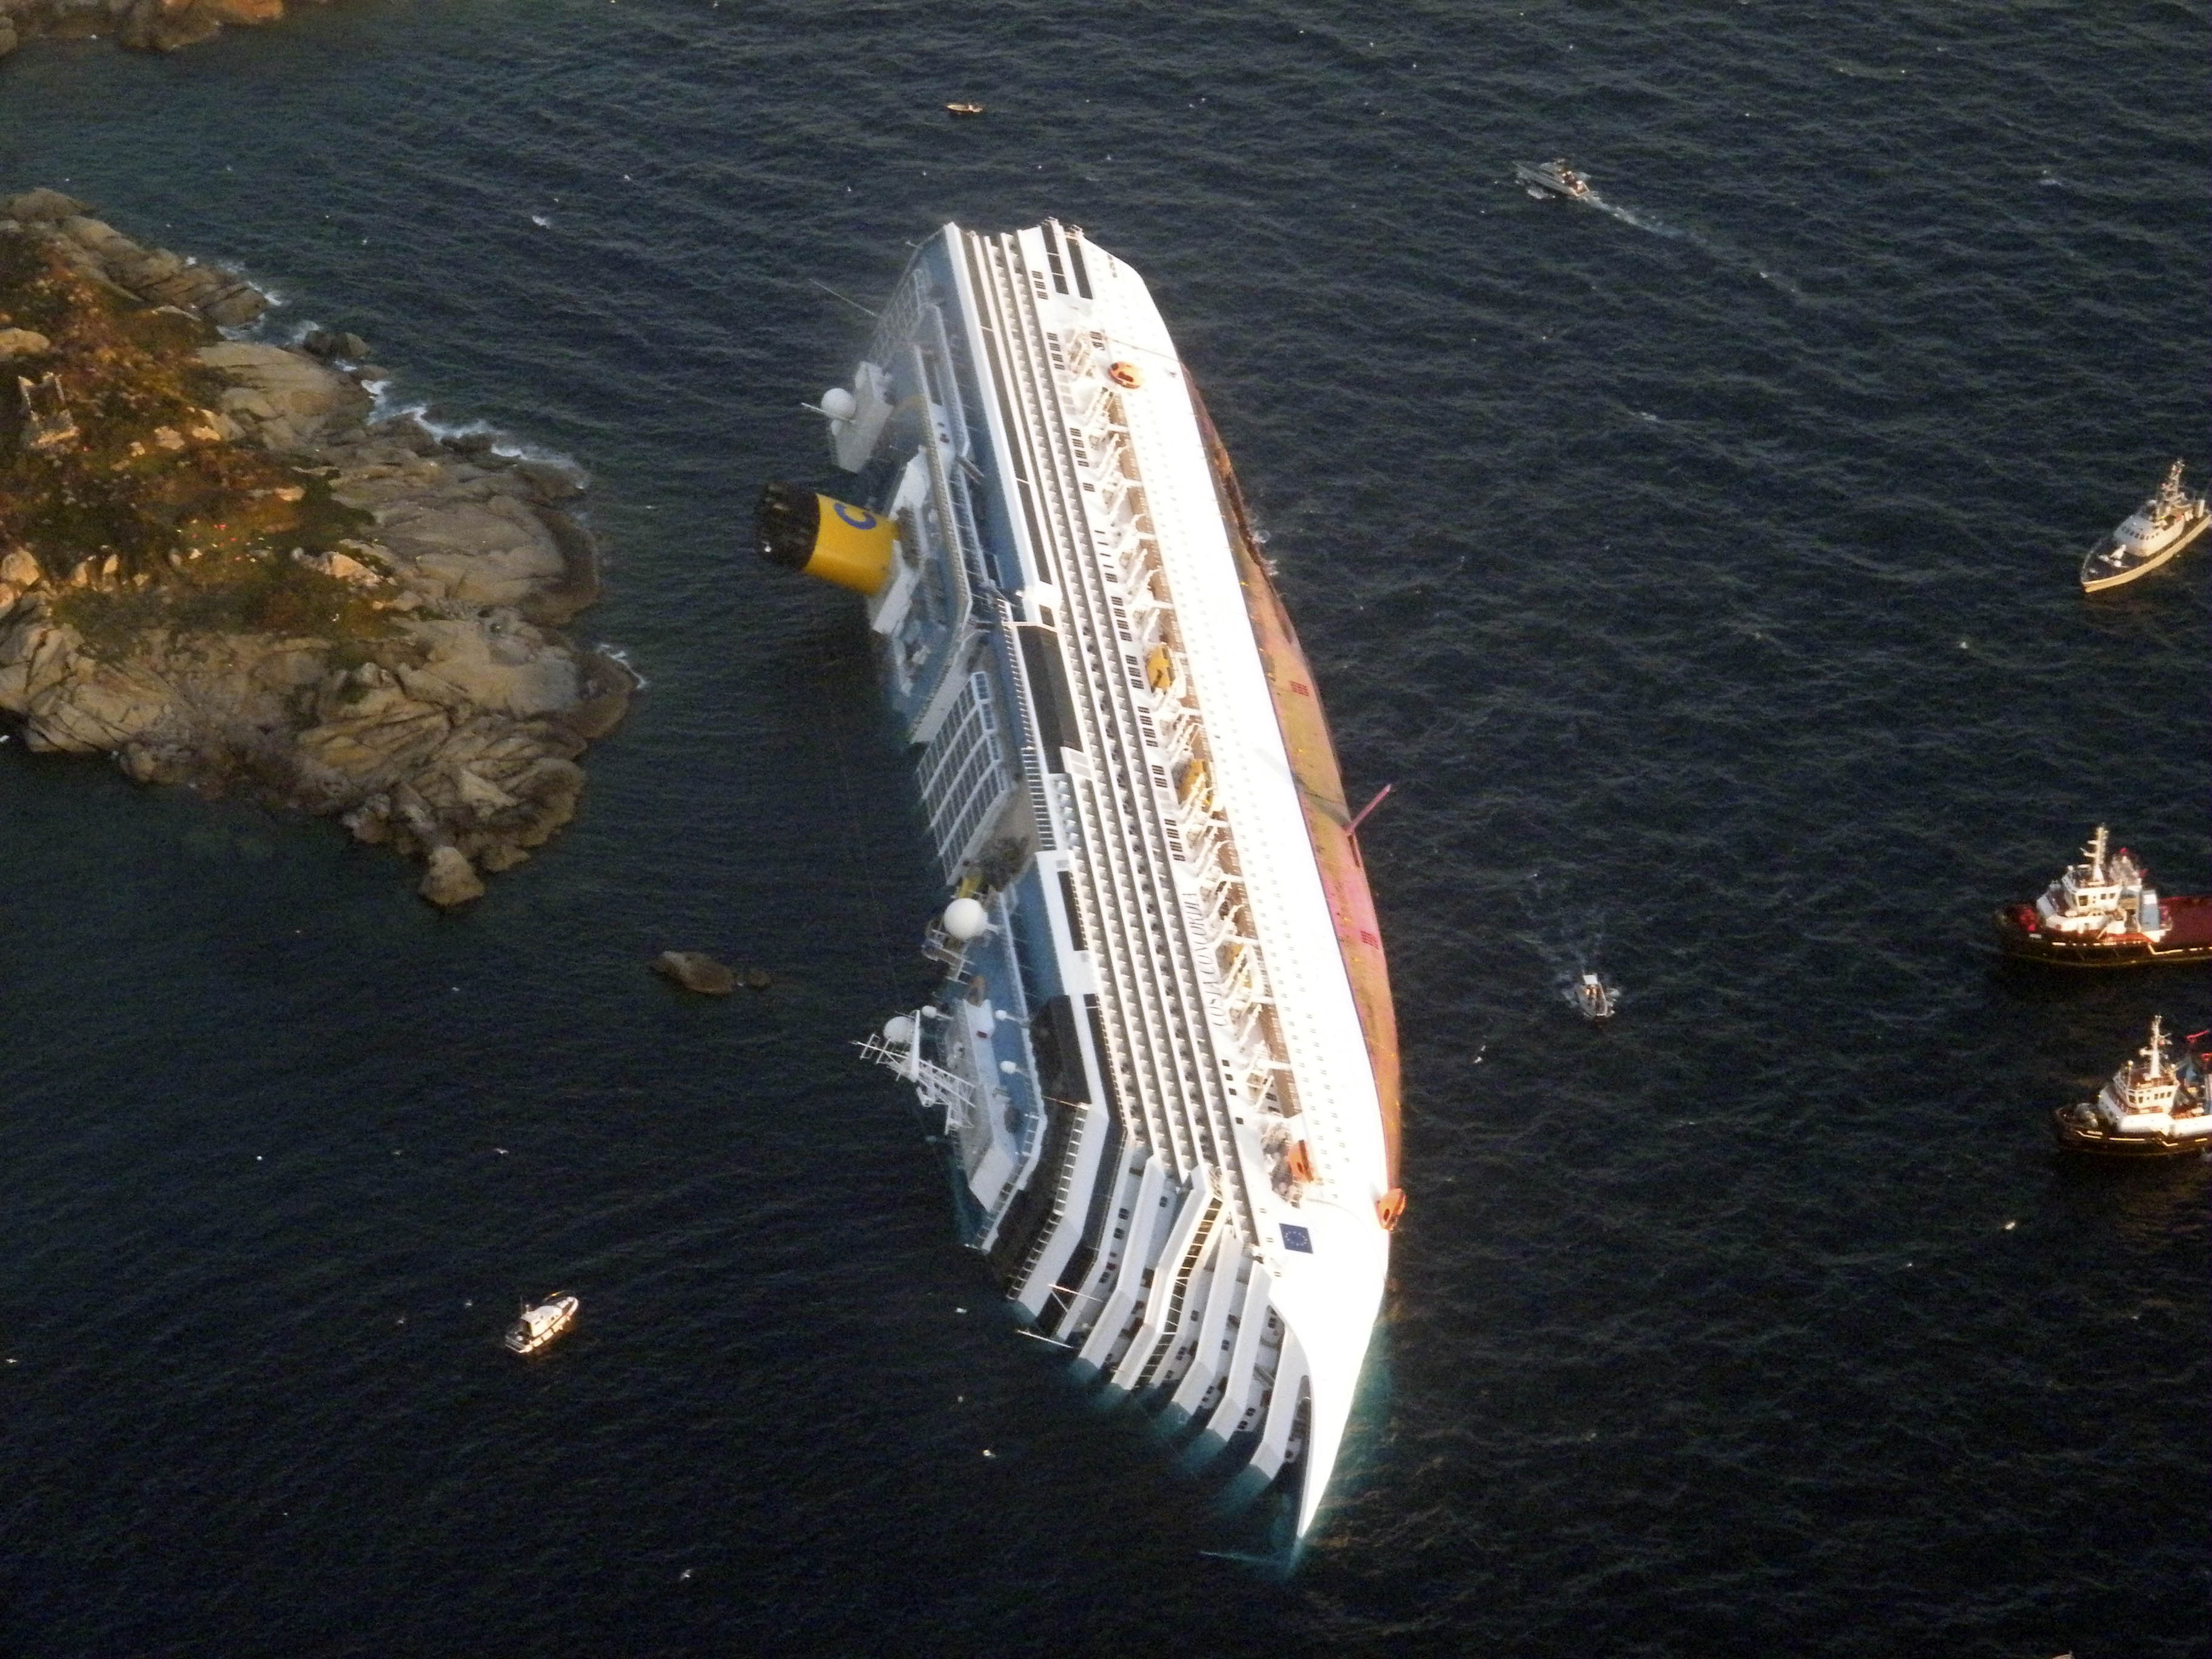 costa concordia cruise ship crash in italy